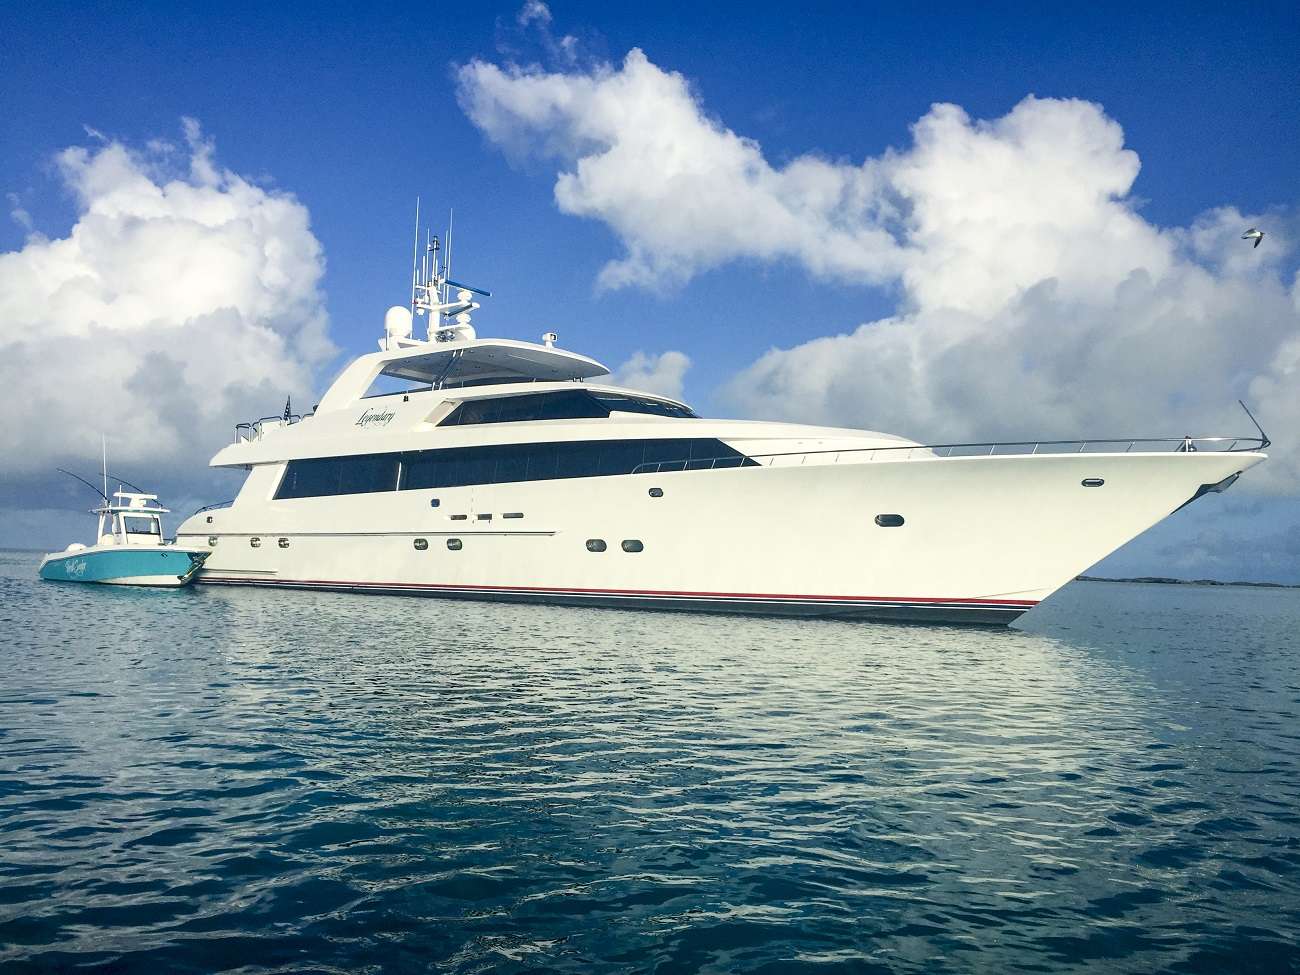 legendary - Motor Boat Charter USA & Boat hire in Florida & Bahamas 1